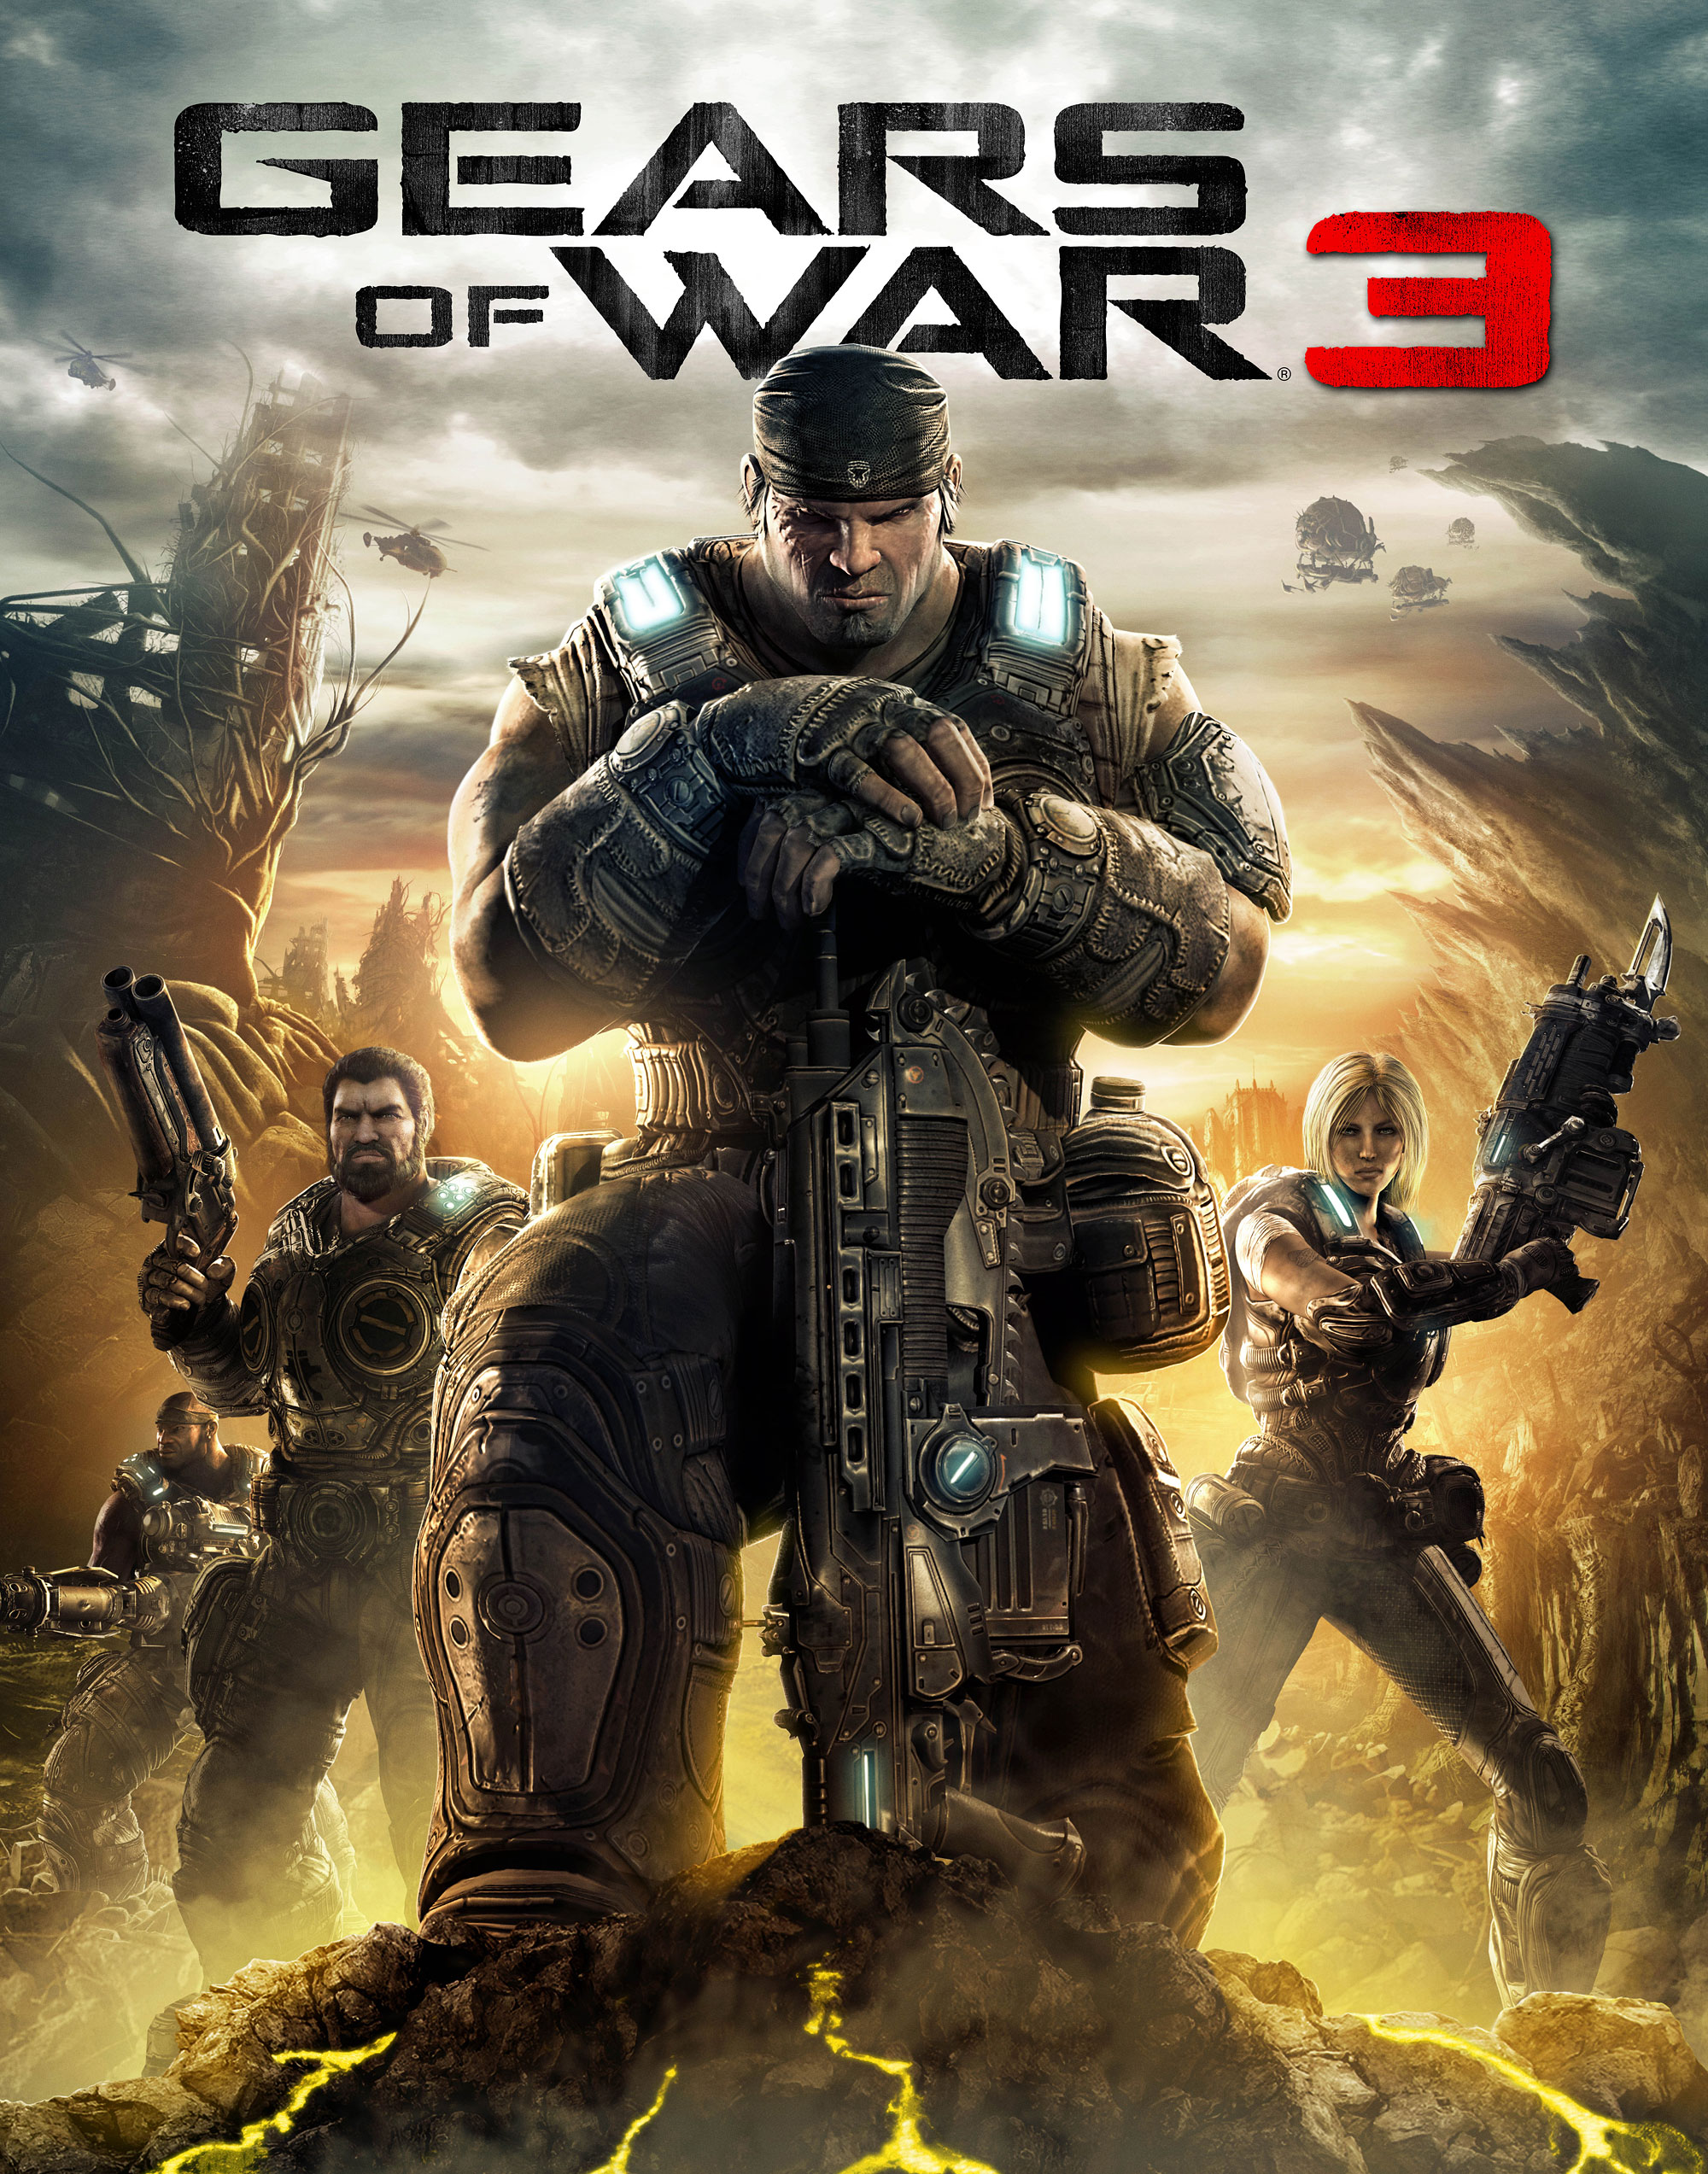 Gears of War 3 Cover Art Released